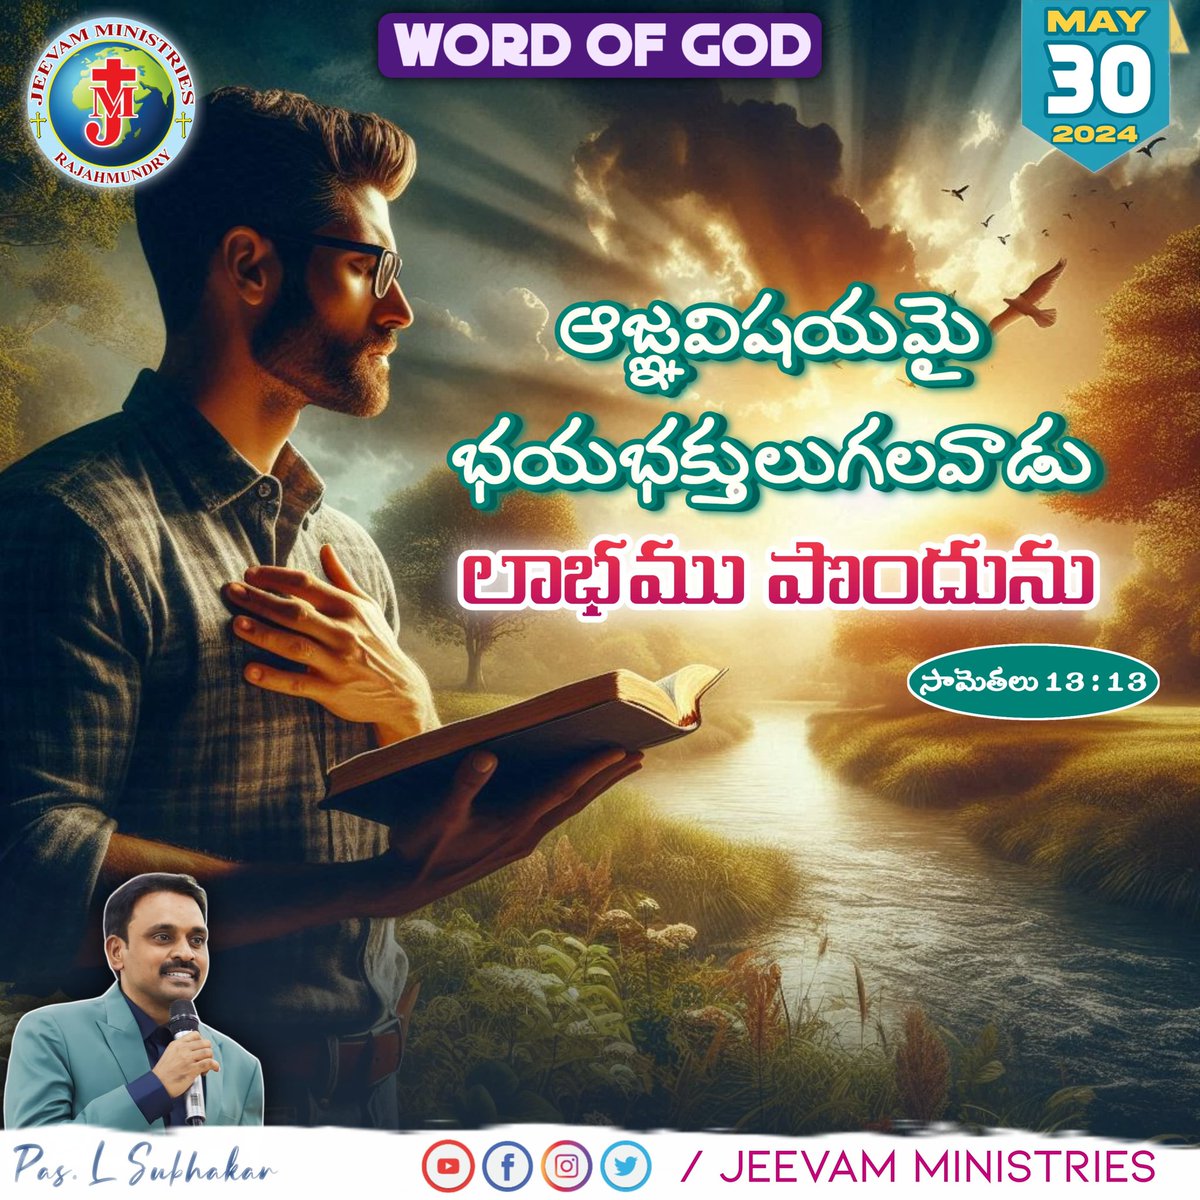 Today's Word of God 🙏
#dailybibleverse✝️ #TeluguBible #Pastor #SUBHAKAR
#JEEVAMMINISTRIES 
#Rajahmundry 
#Thursdaymotivation #30May2024